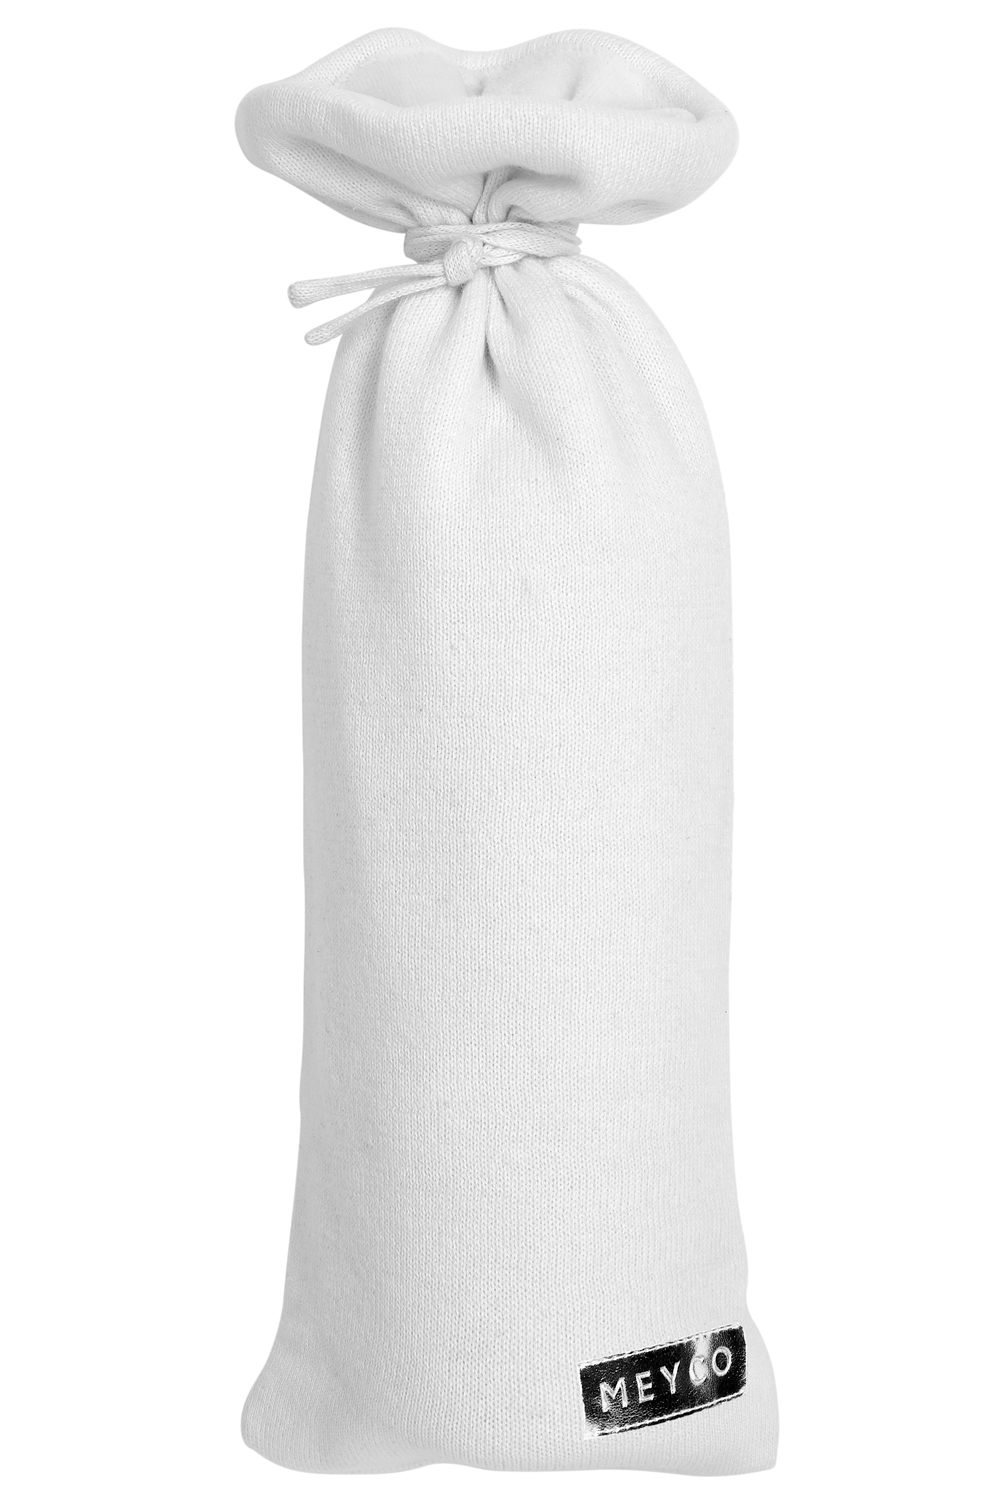 Wärmflaschenbezug Knit Basic - warm white